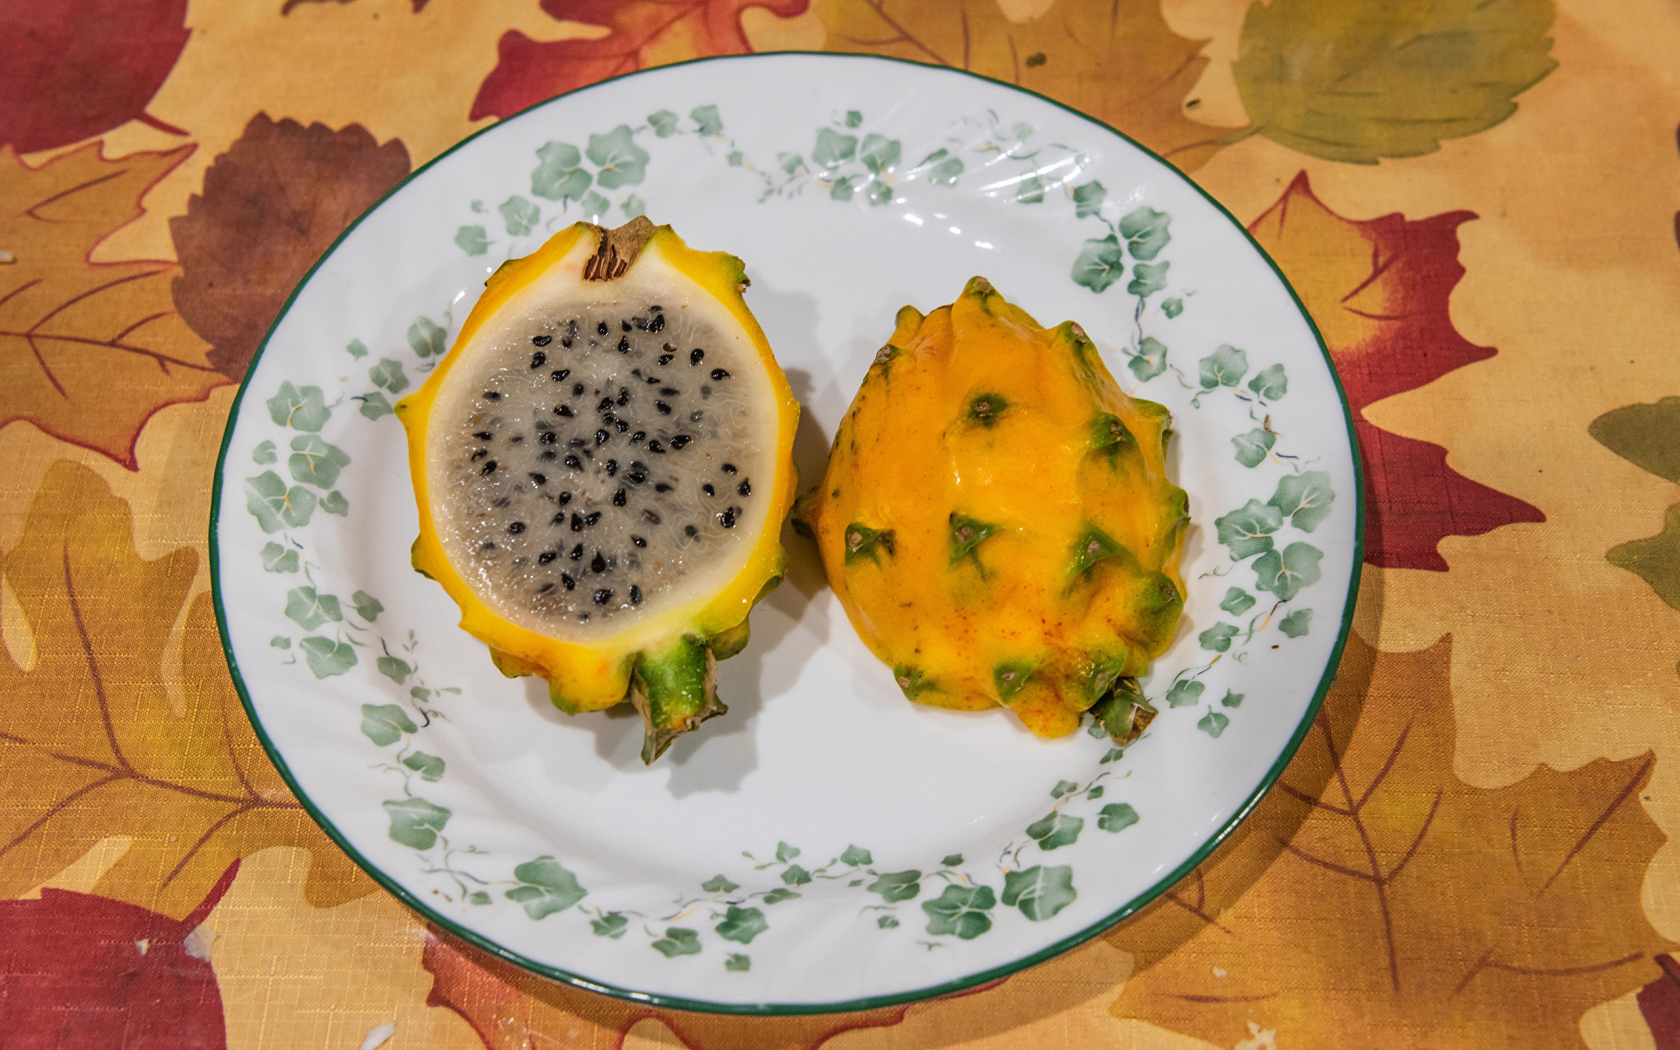 Petaya fruit on a plate on the table